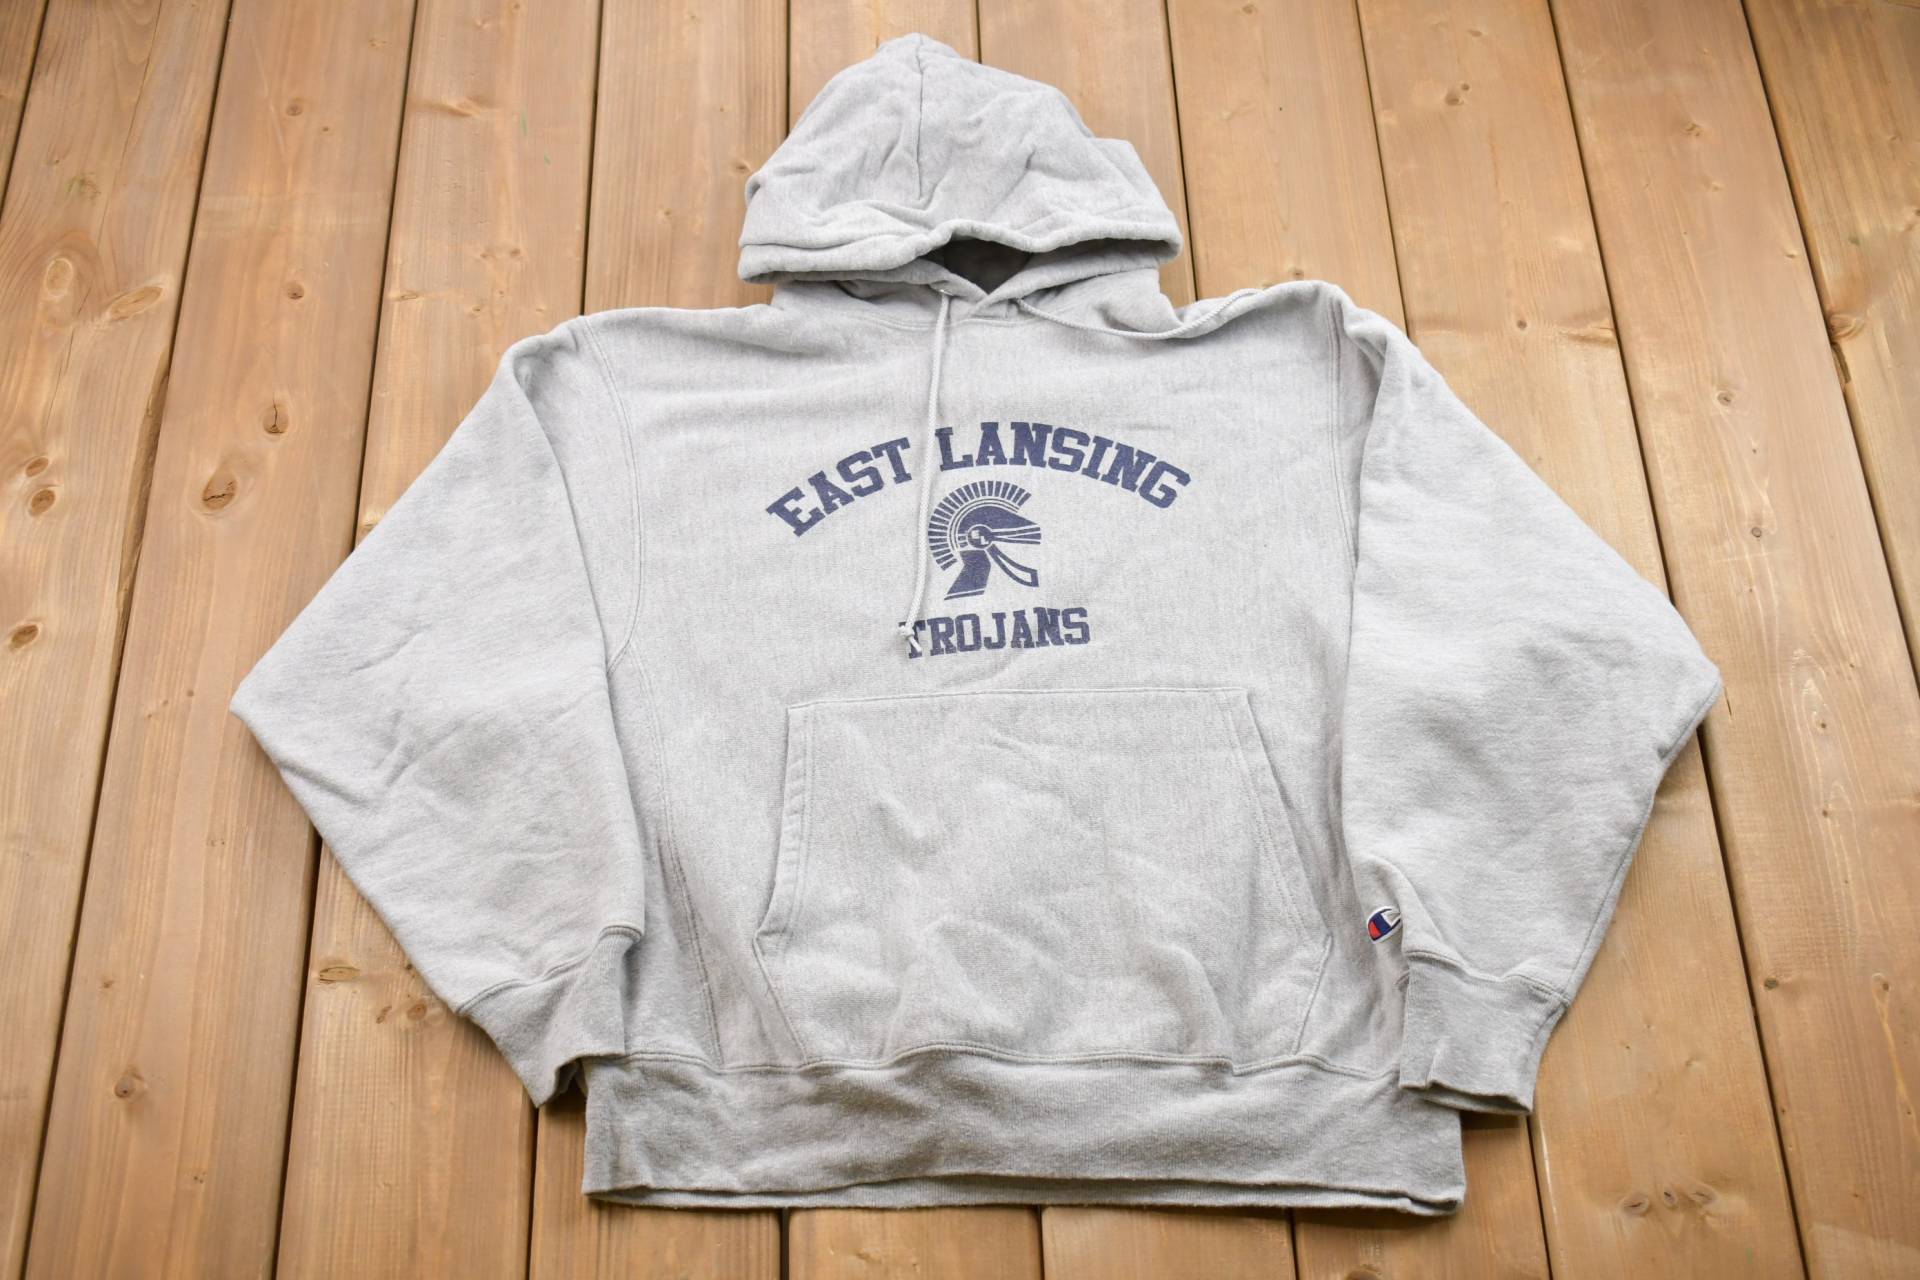 Vintage 1990S East Lansing Trojas Champion Sweatshirt/Pullover Streetwear Athleisure Sportswear Ecaa von Lostboysvintage